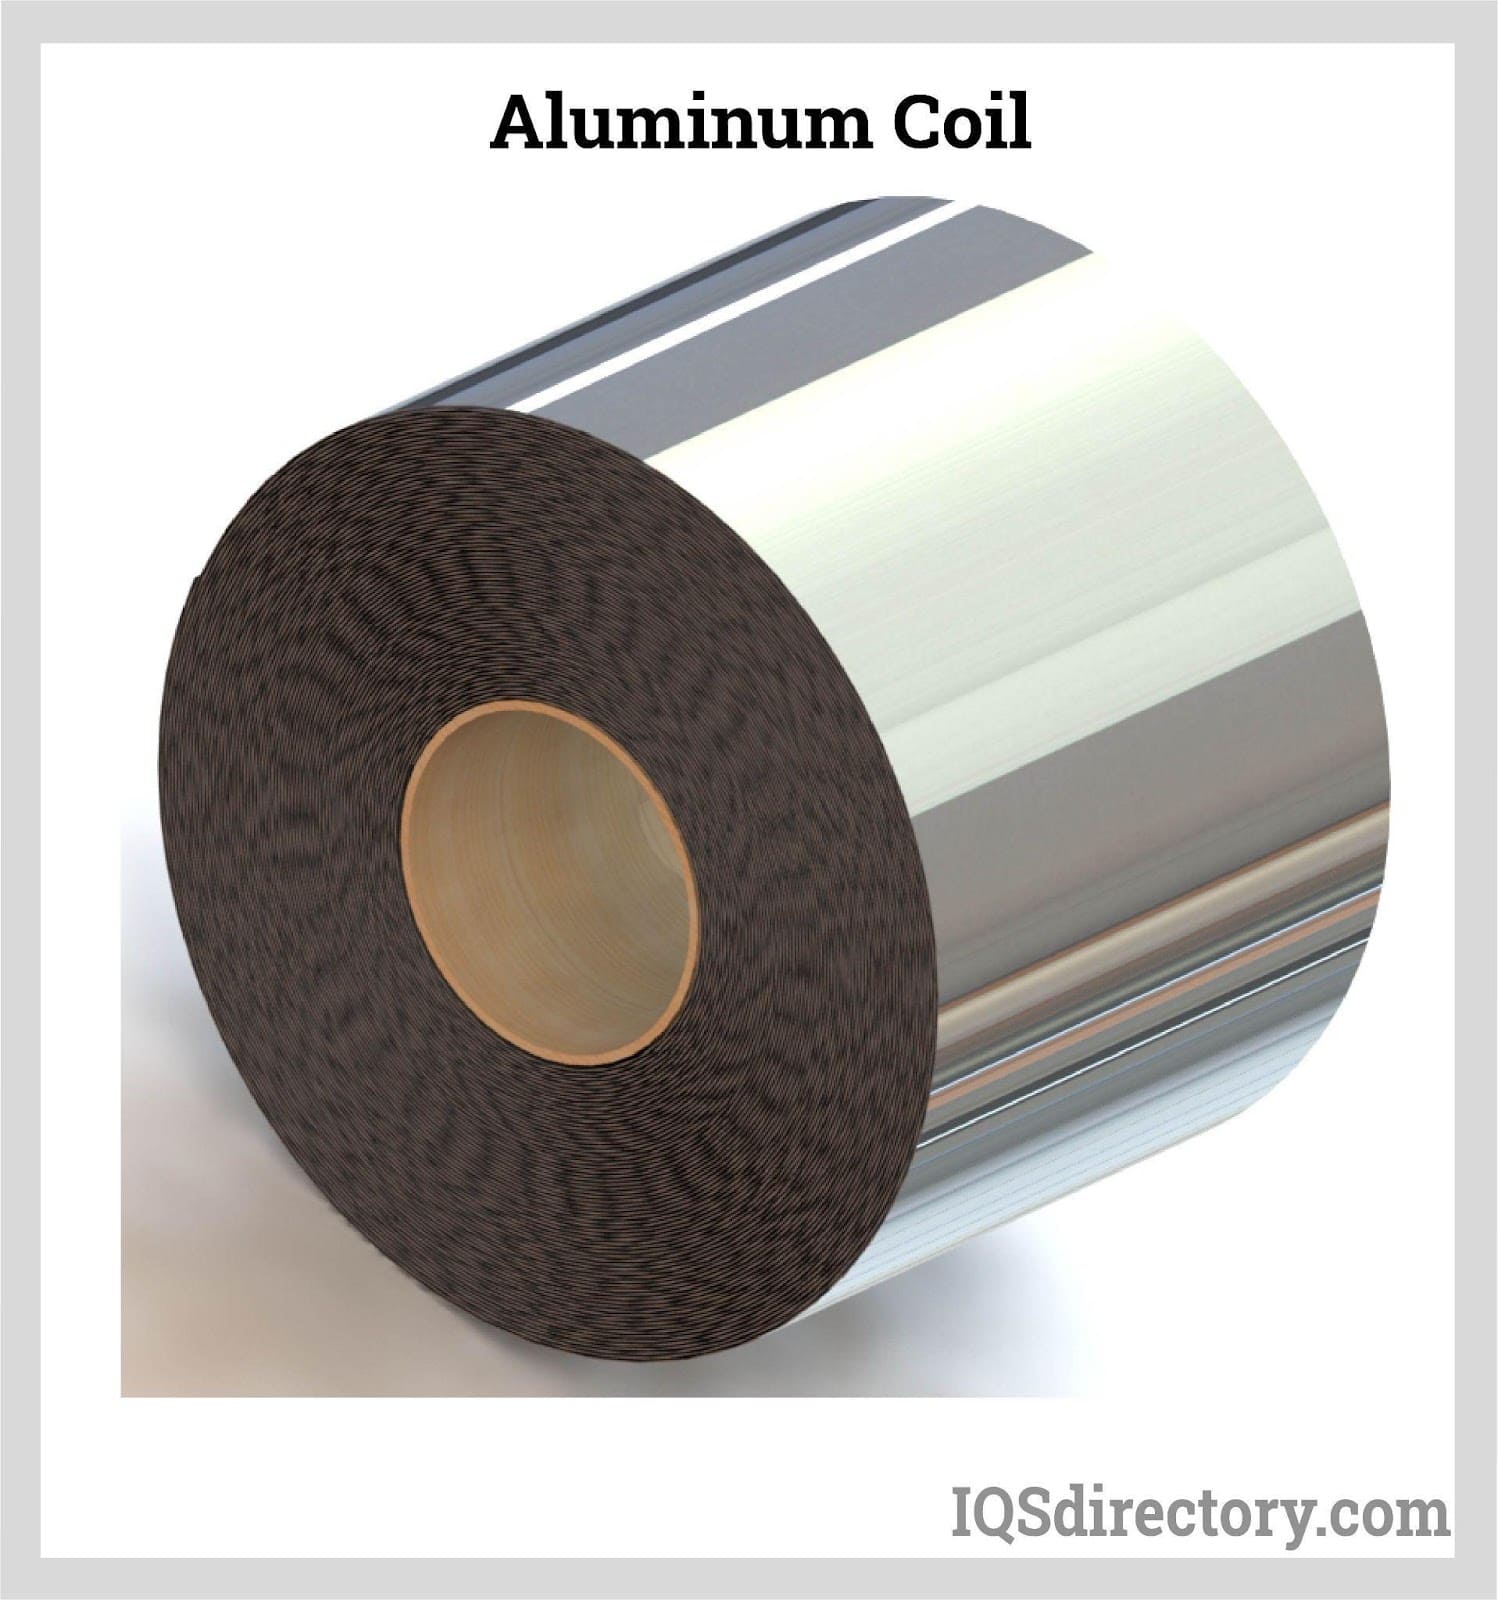 For Greater Aluminum Melt Flexibility, Consider Induction Melting